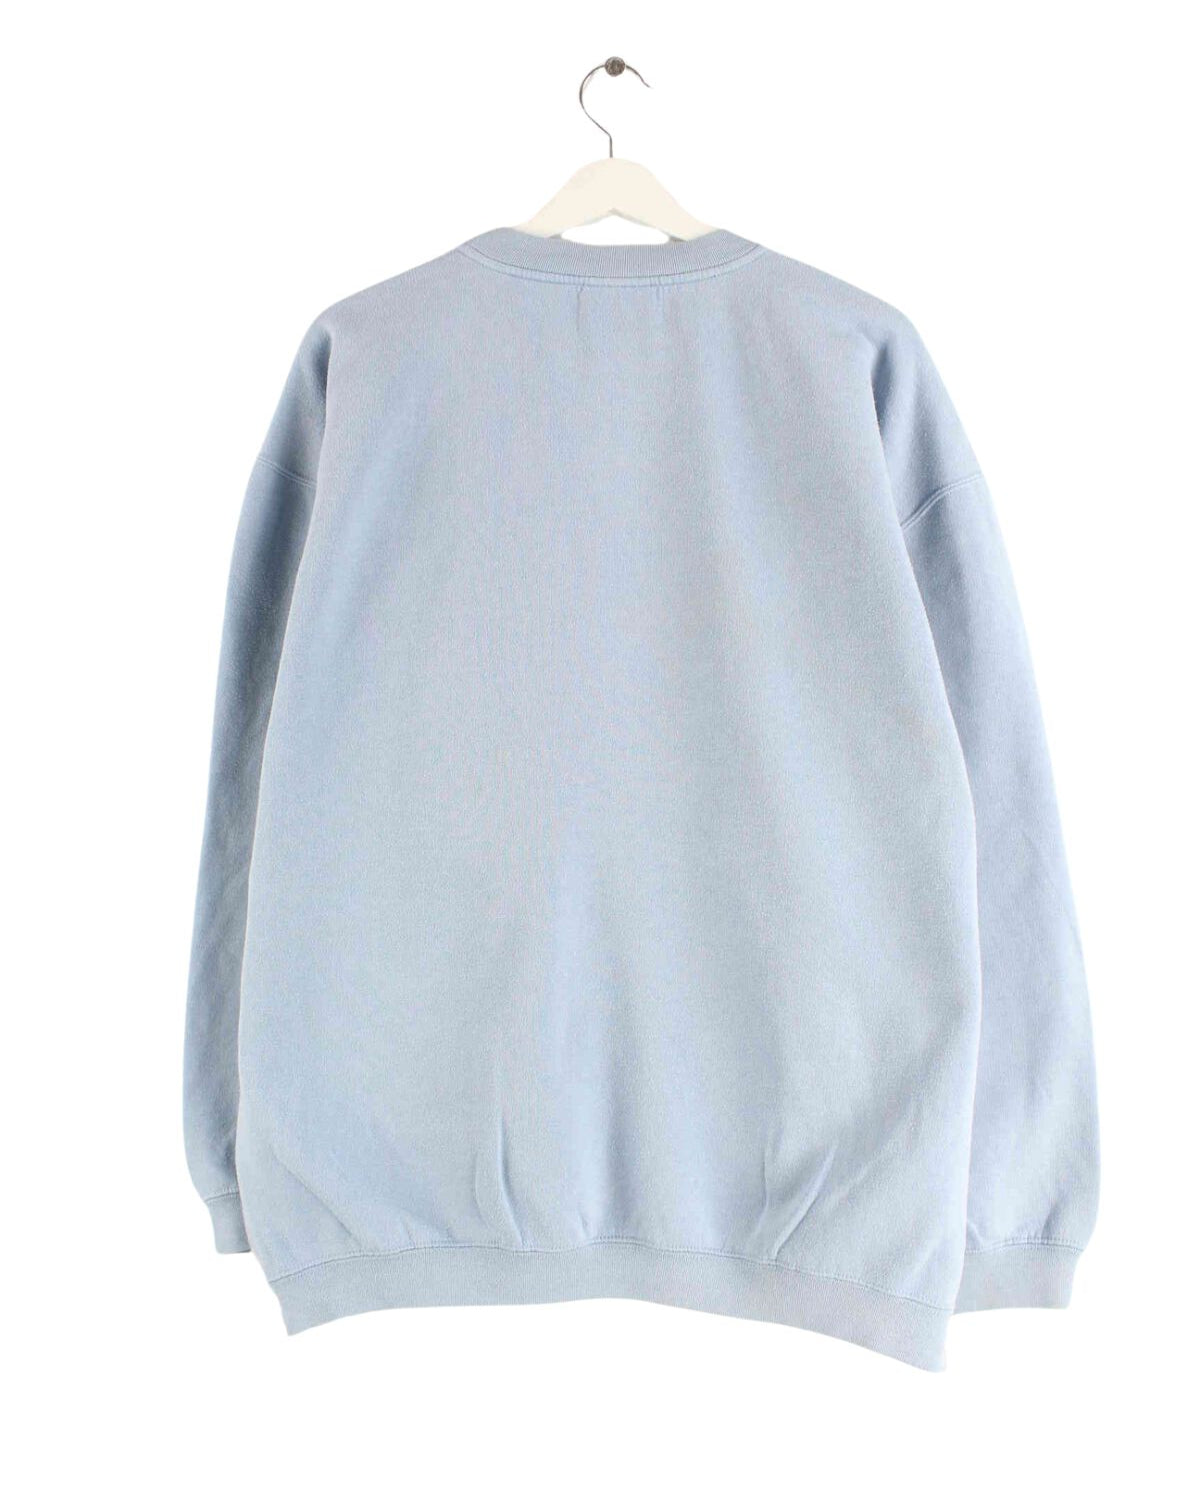 Reebok y2k Embroidered Sweater Blau L (back image)